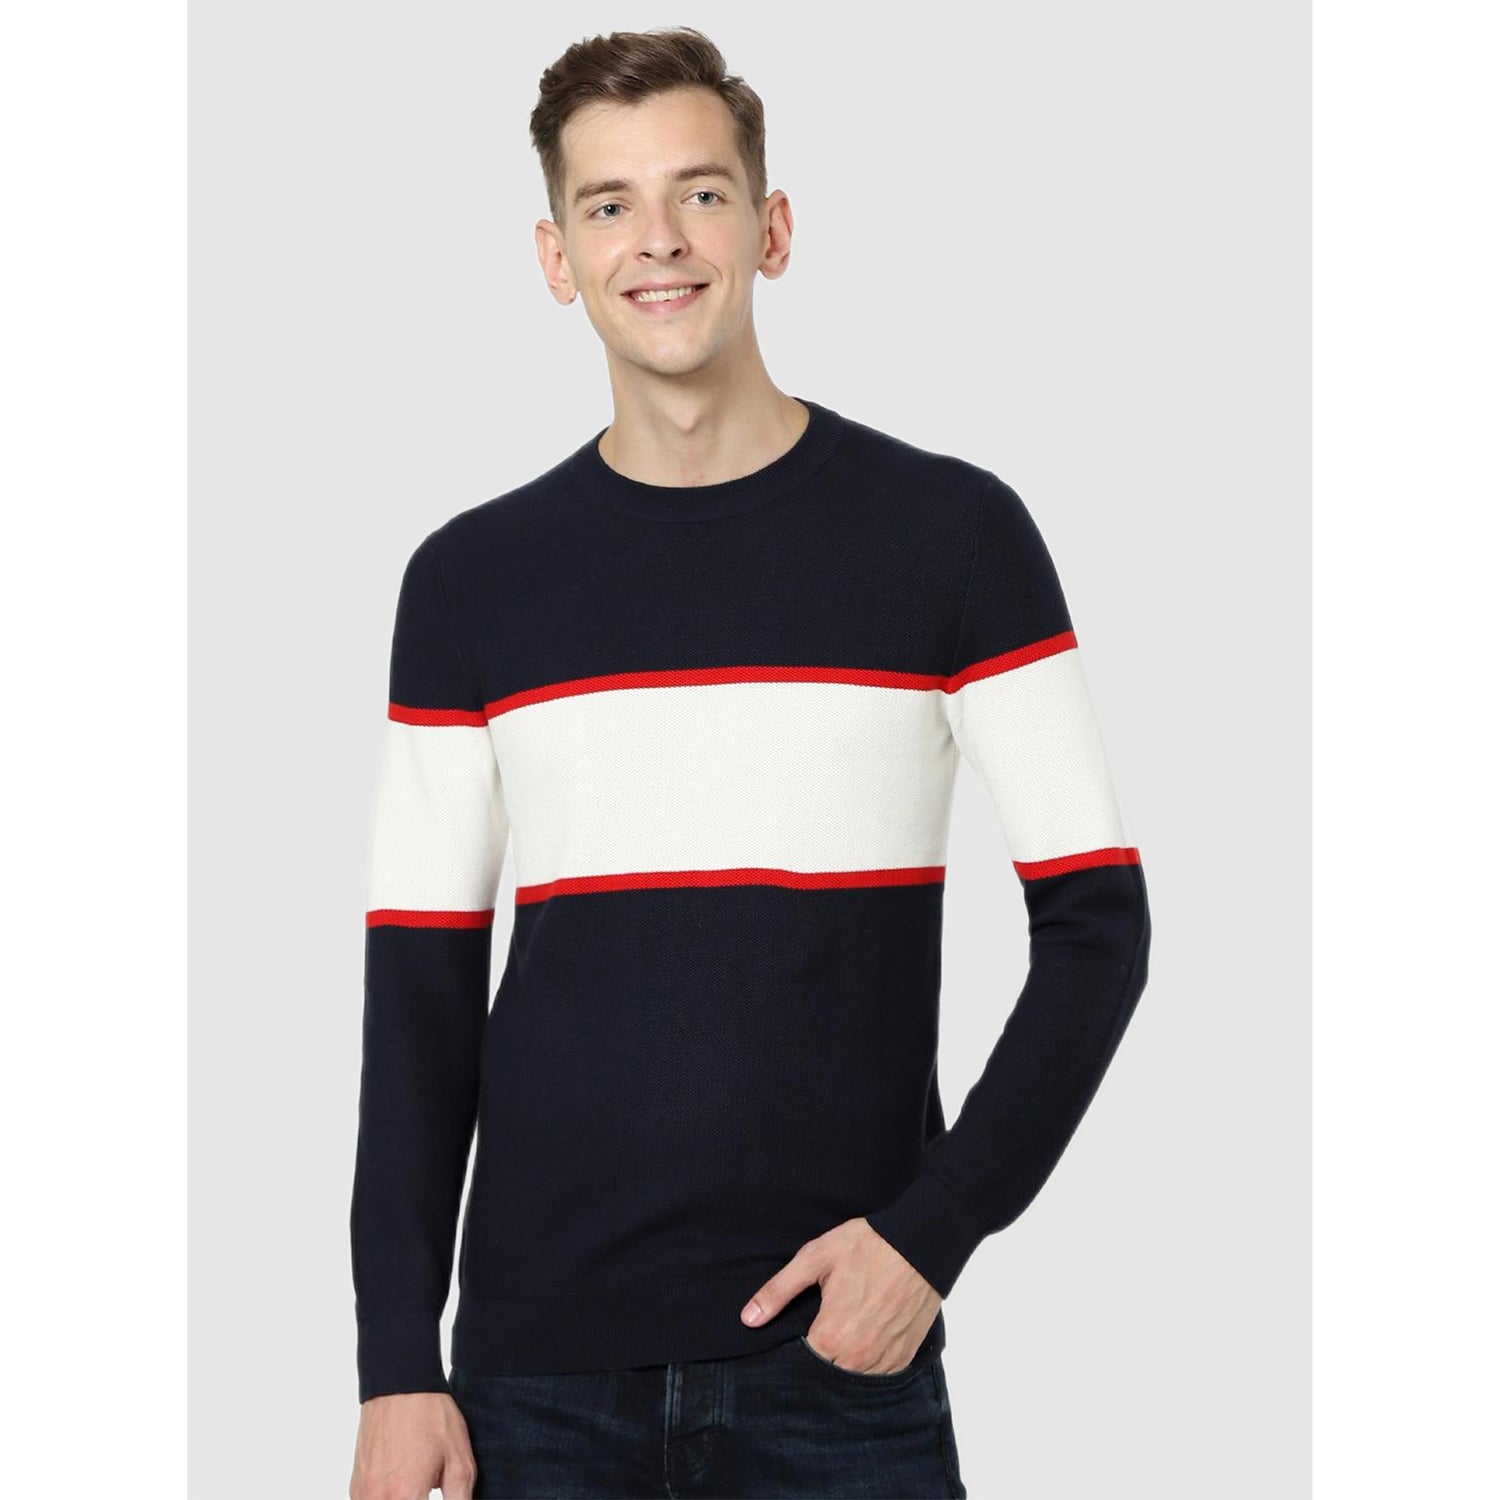 Navy Color-Block Regular Fit Sweater (Various Sizes)